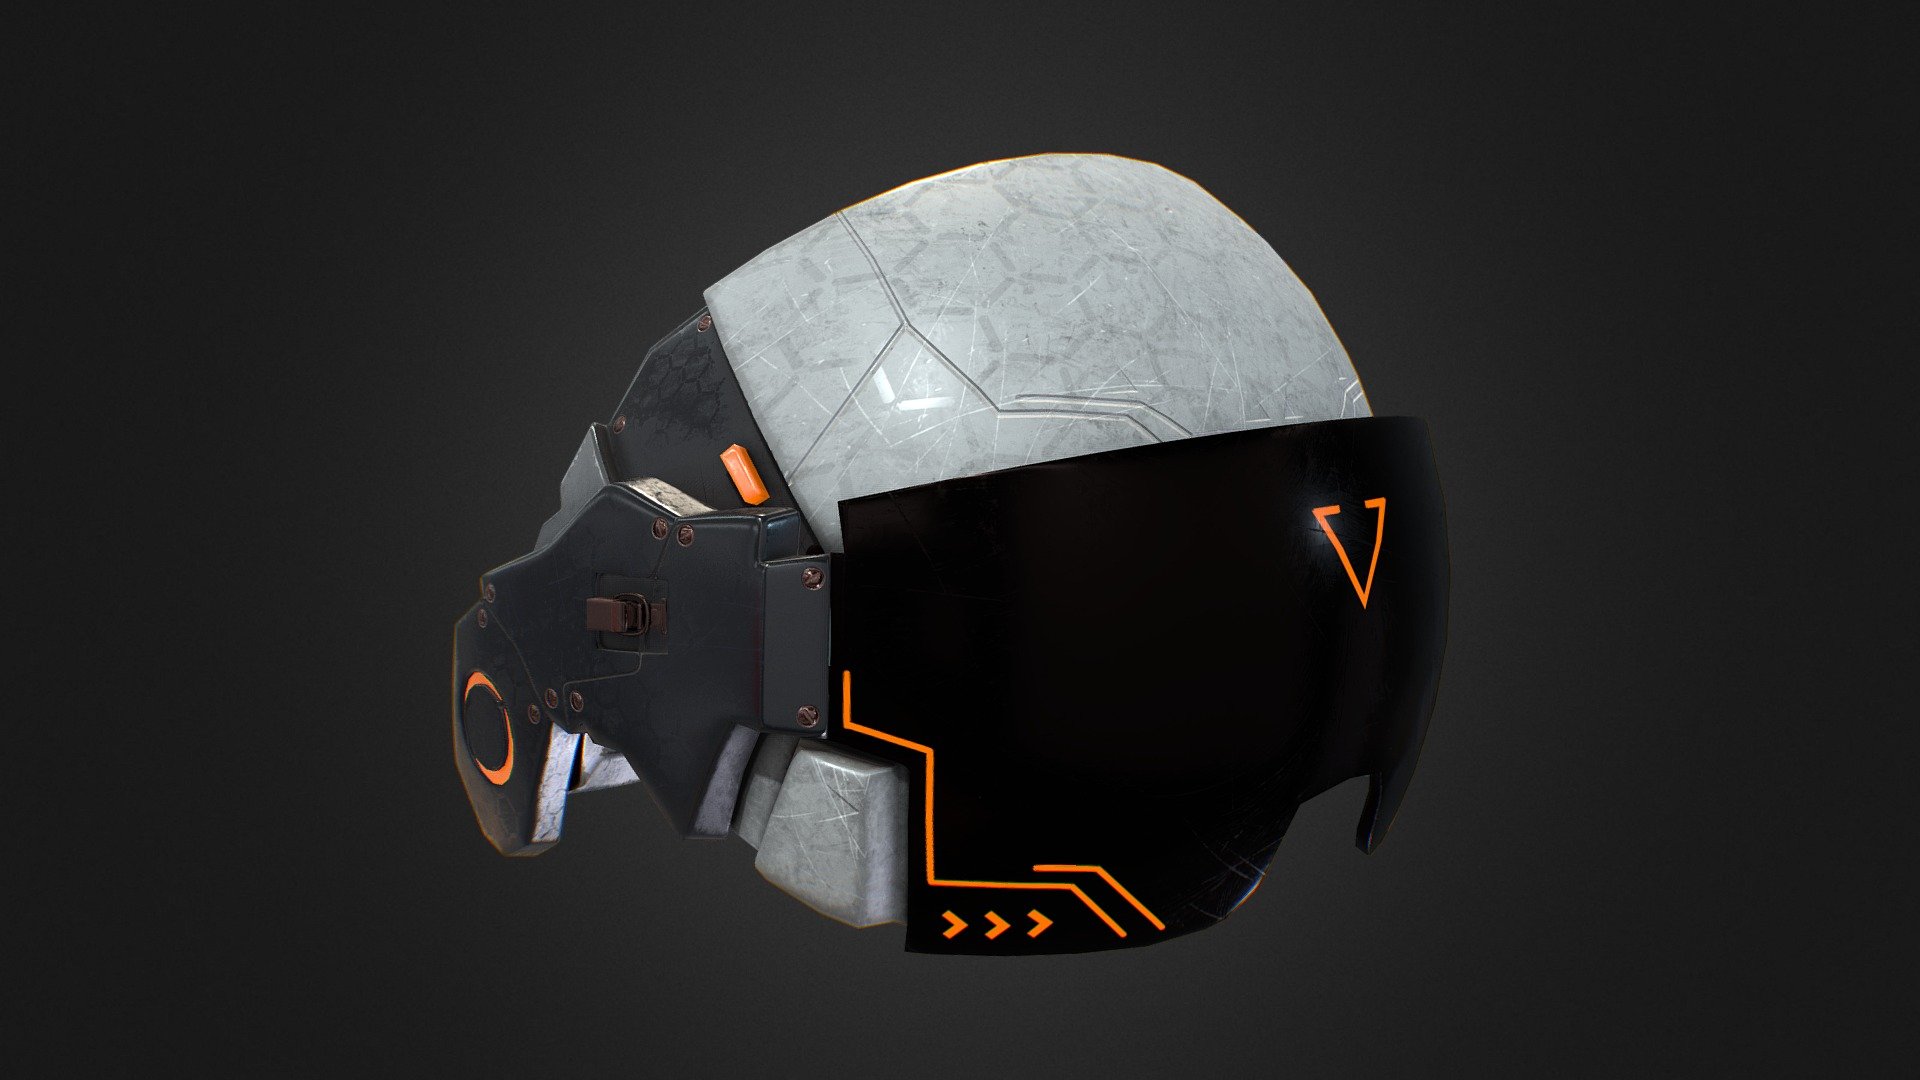 Original concept by Elie Gomez - Sci-Fi Helmet - 3D model by roxana_moshashai 3d model